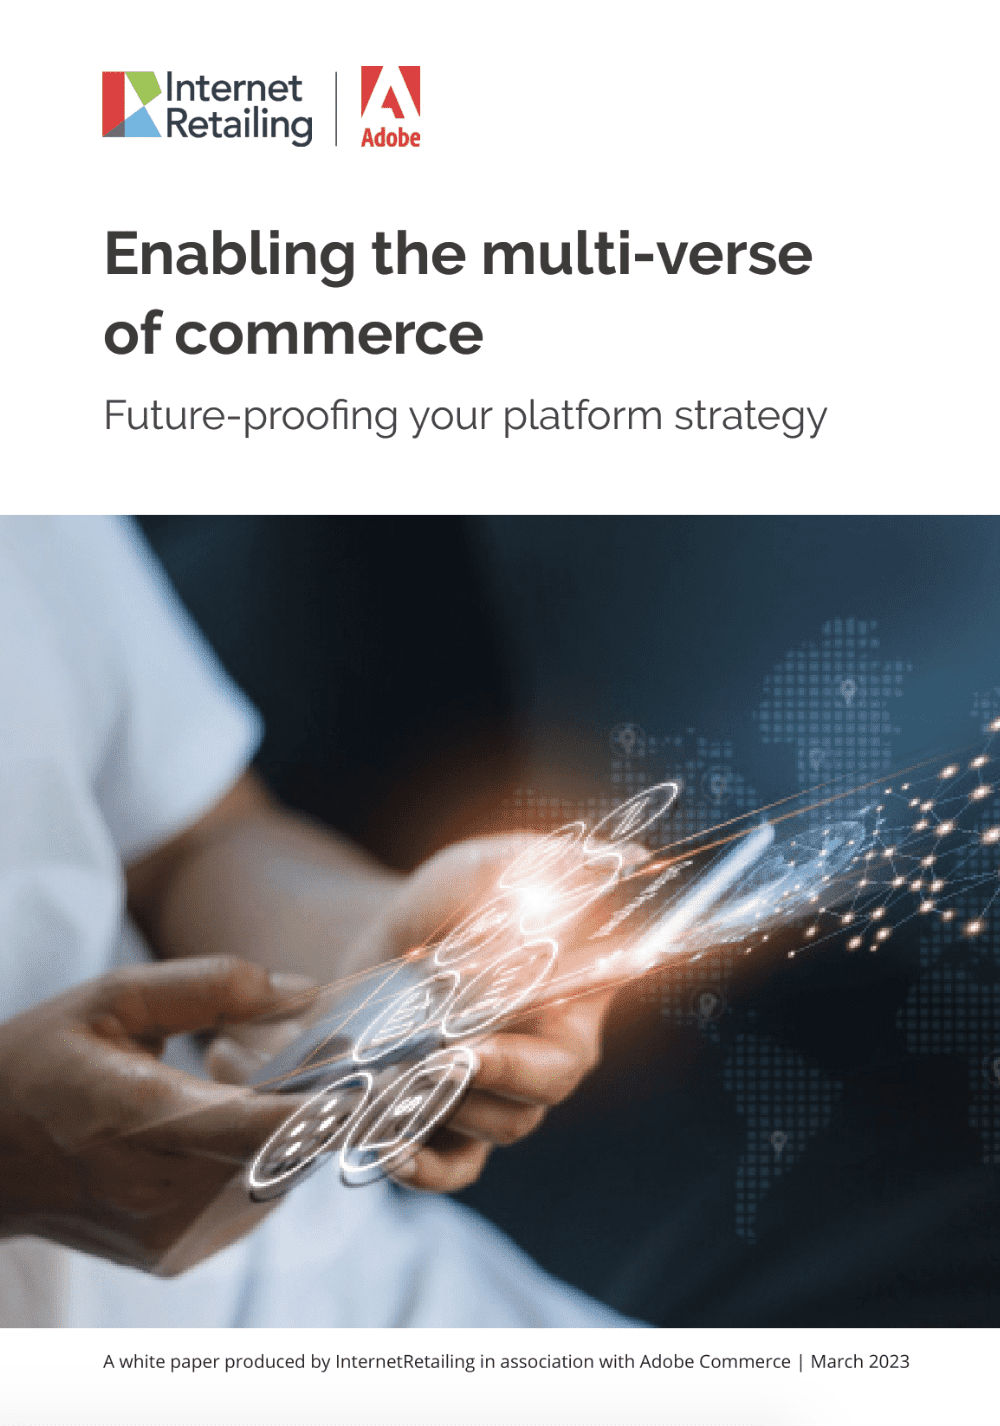 Adobe: Enabling the multi-verse of commerce